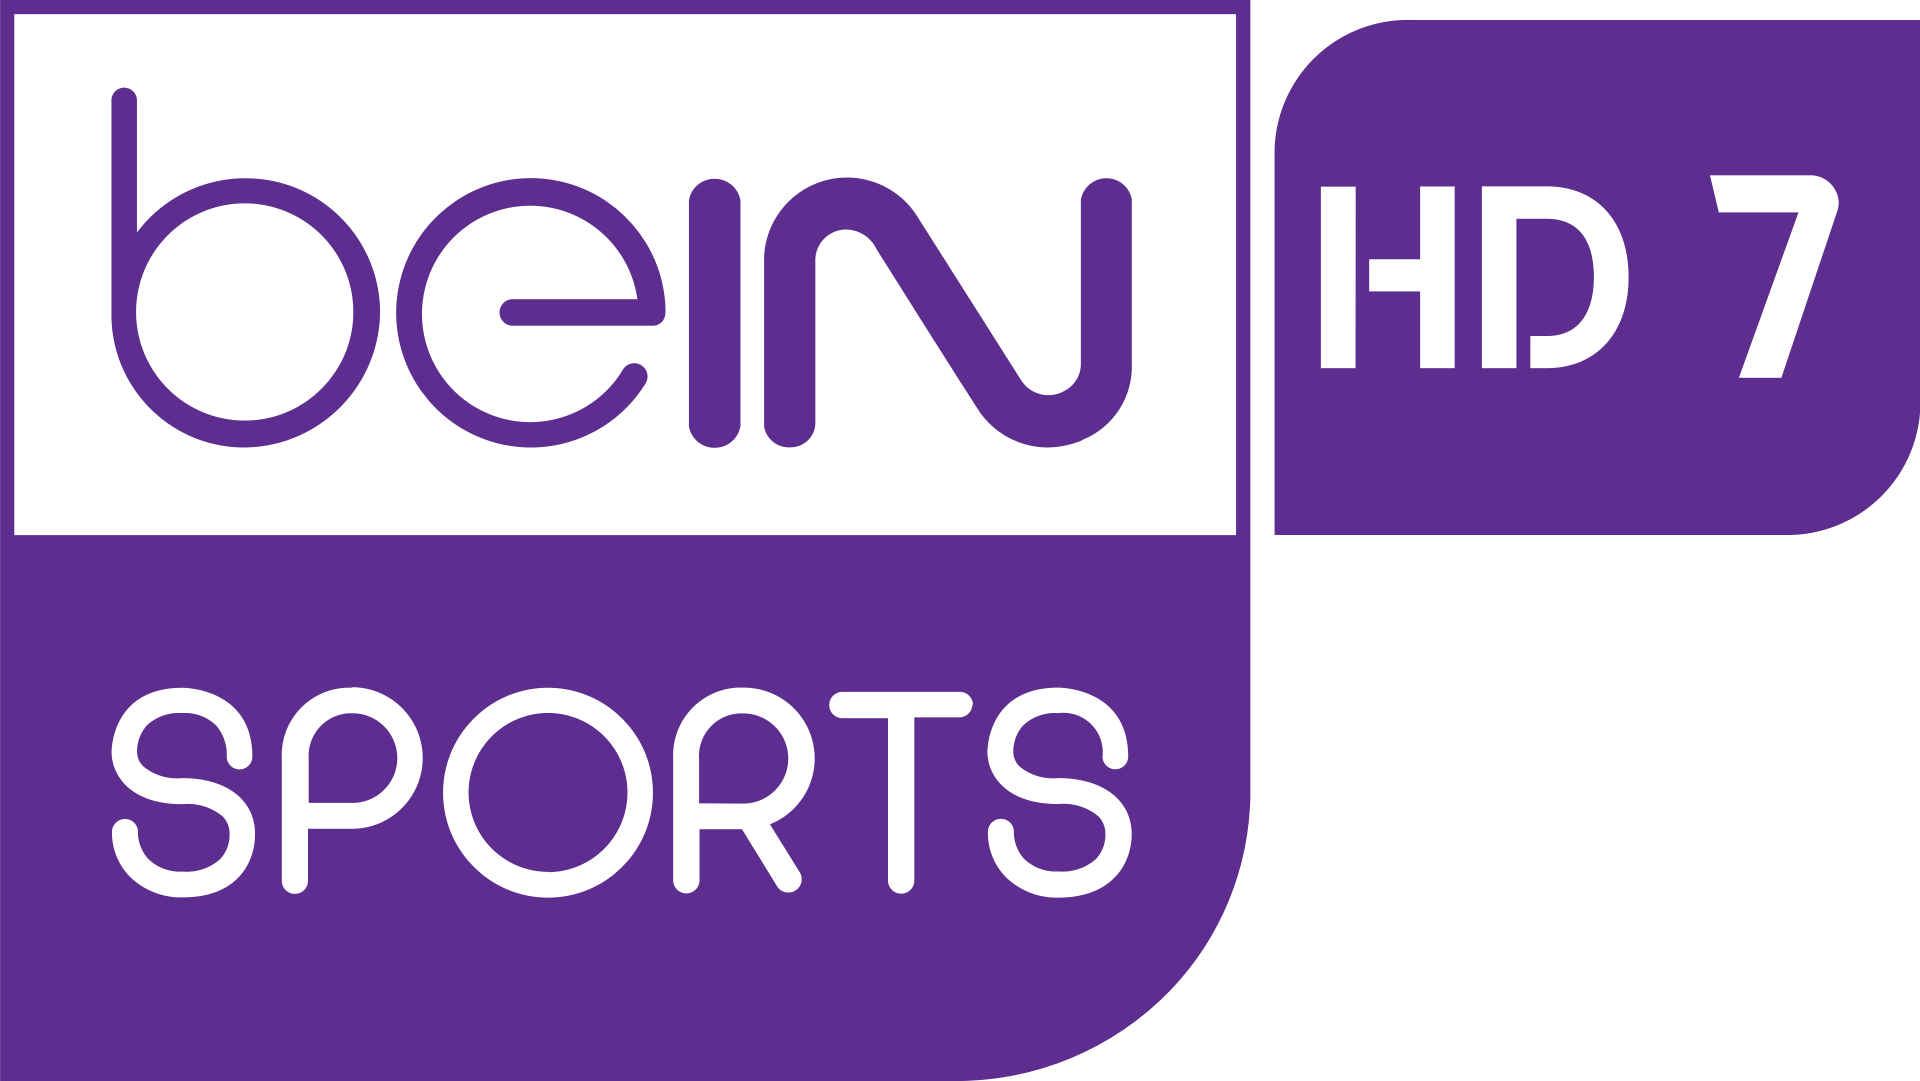 bein-sports-HD7.png  by otan